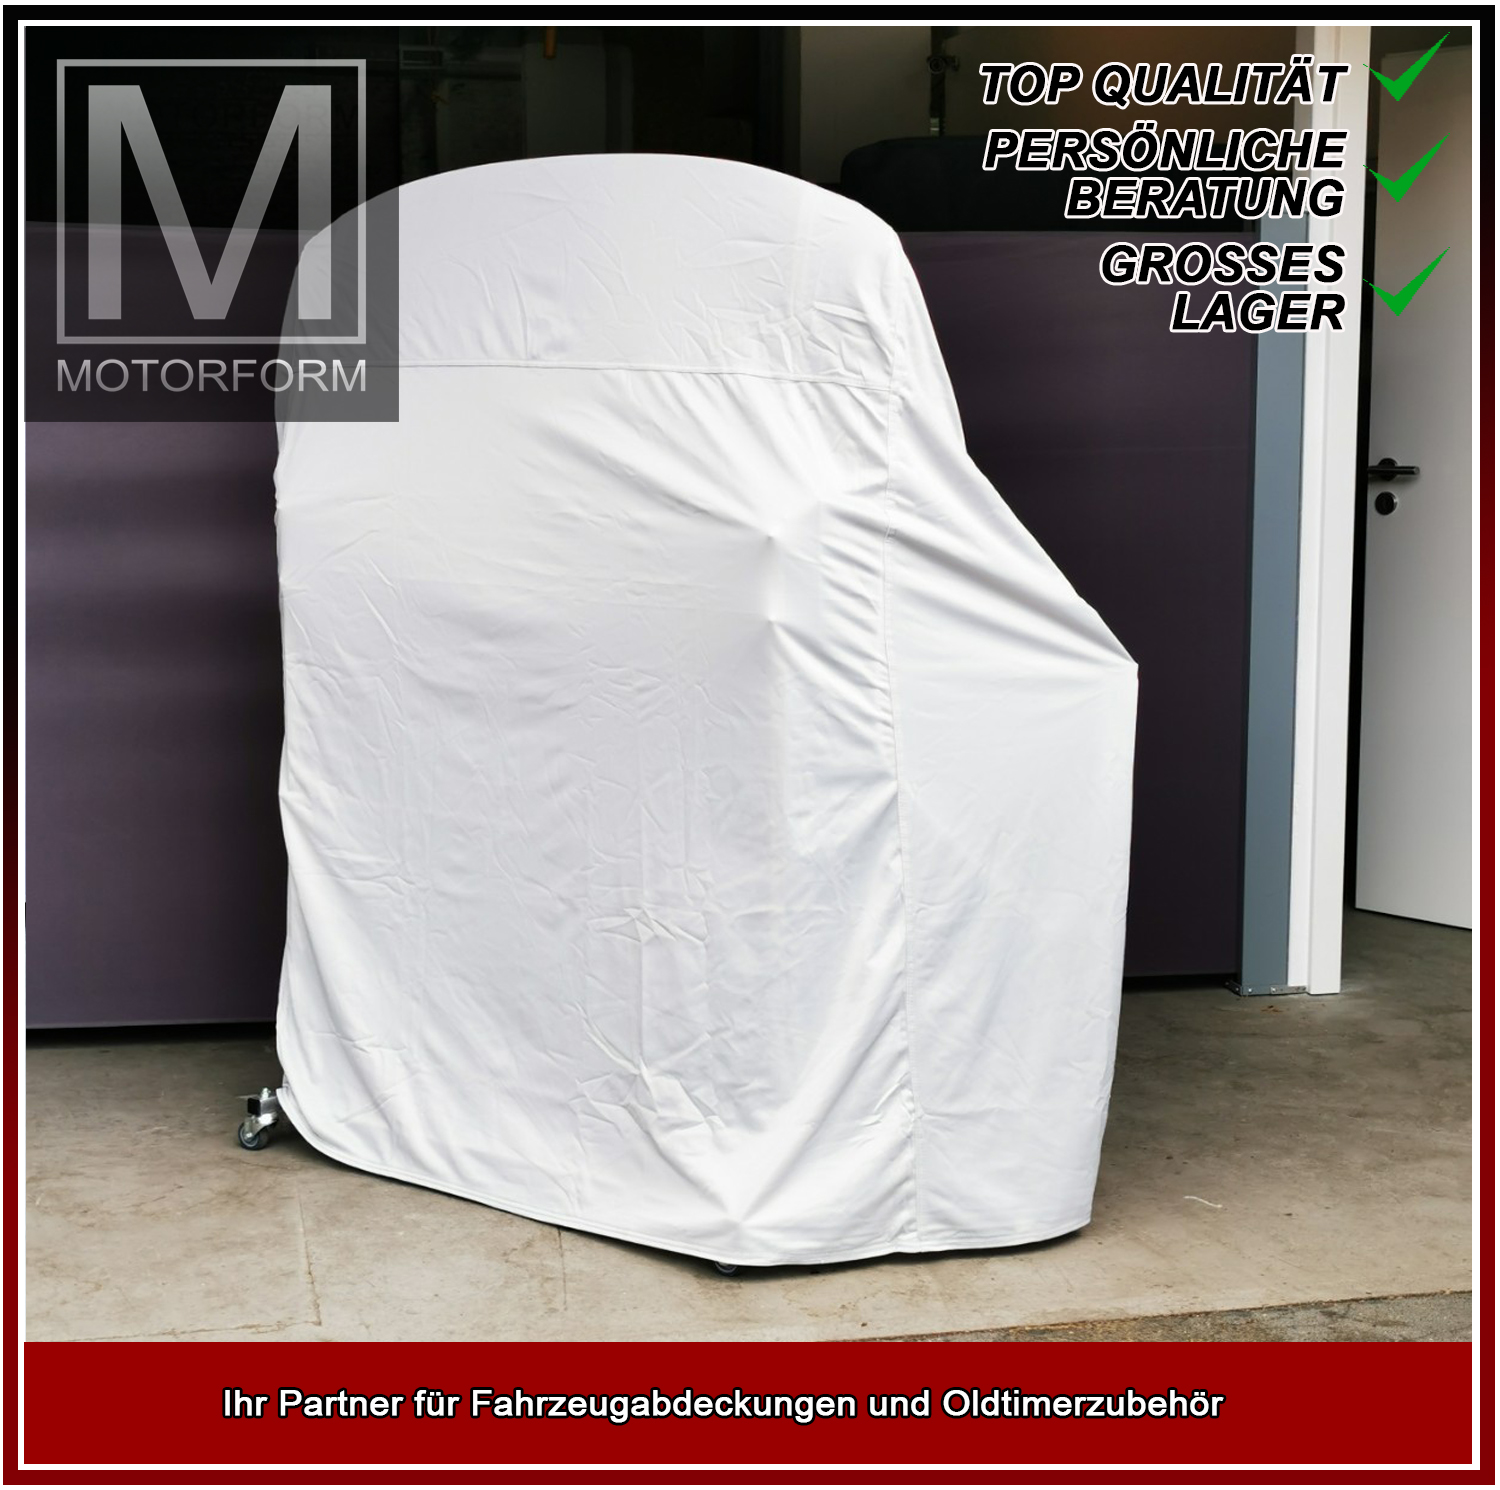 Silver Series Hardtop-Cover for Hardtop-Cover Mercedes SL-Class 